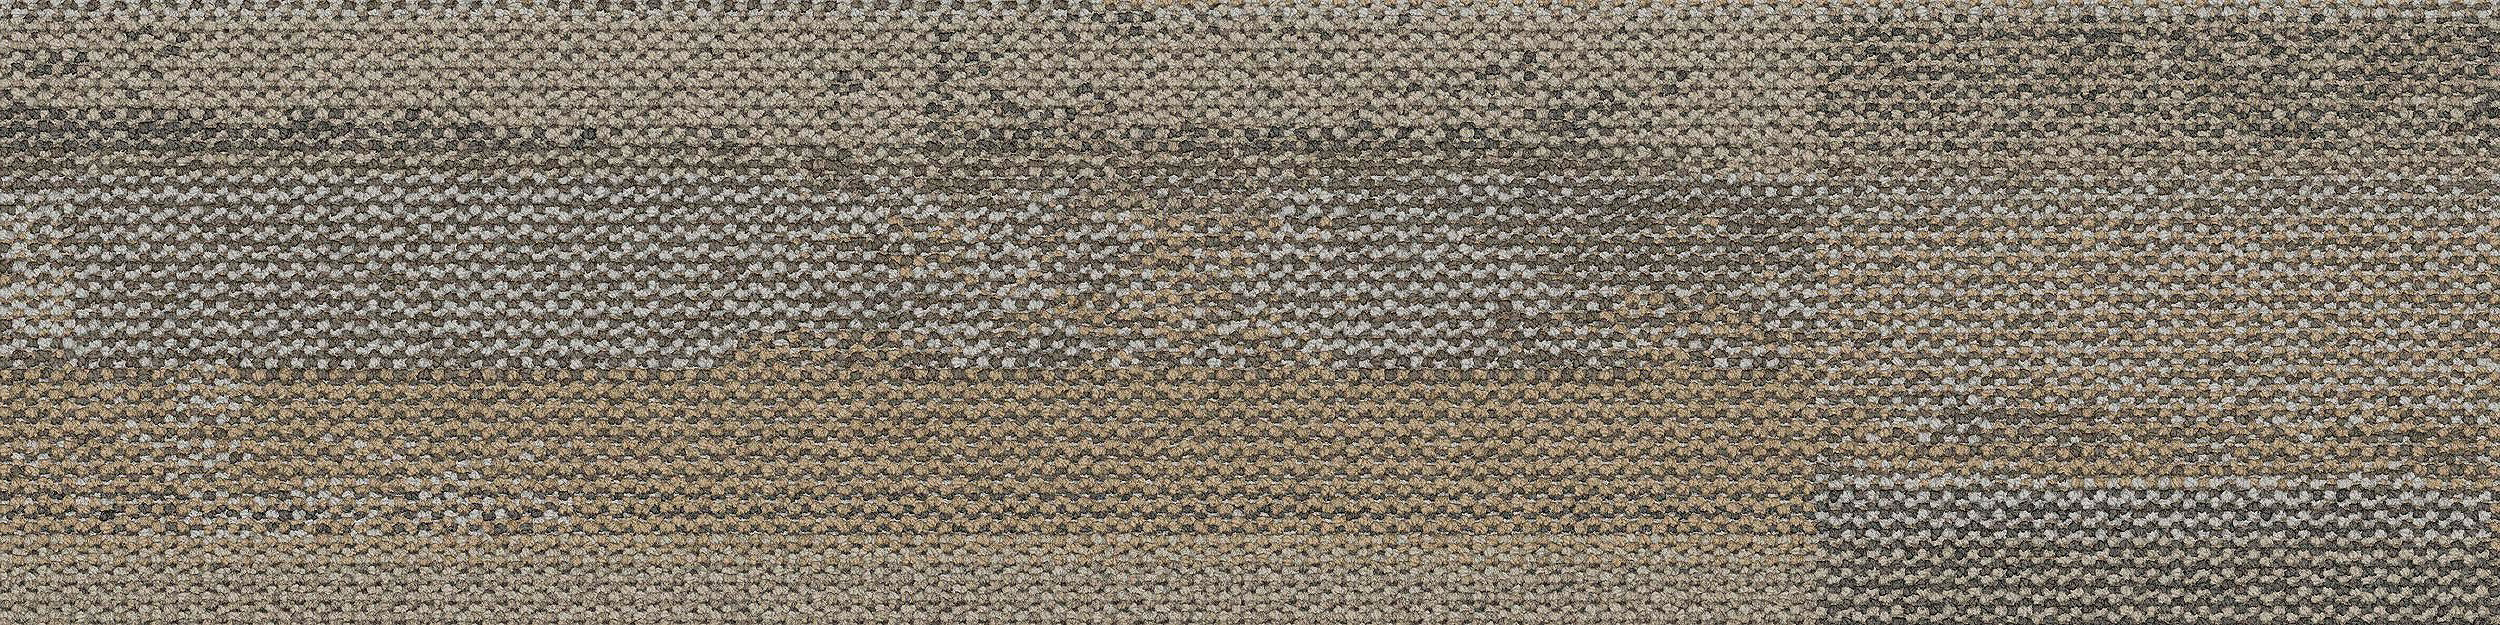 Reclaim Carpet Tile In Cottage Taupe image number 7